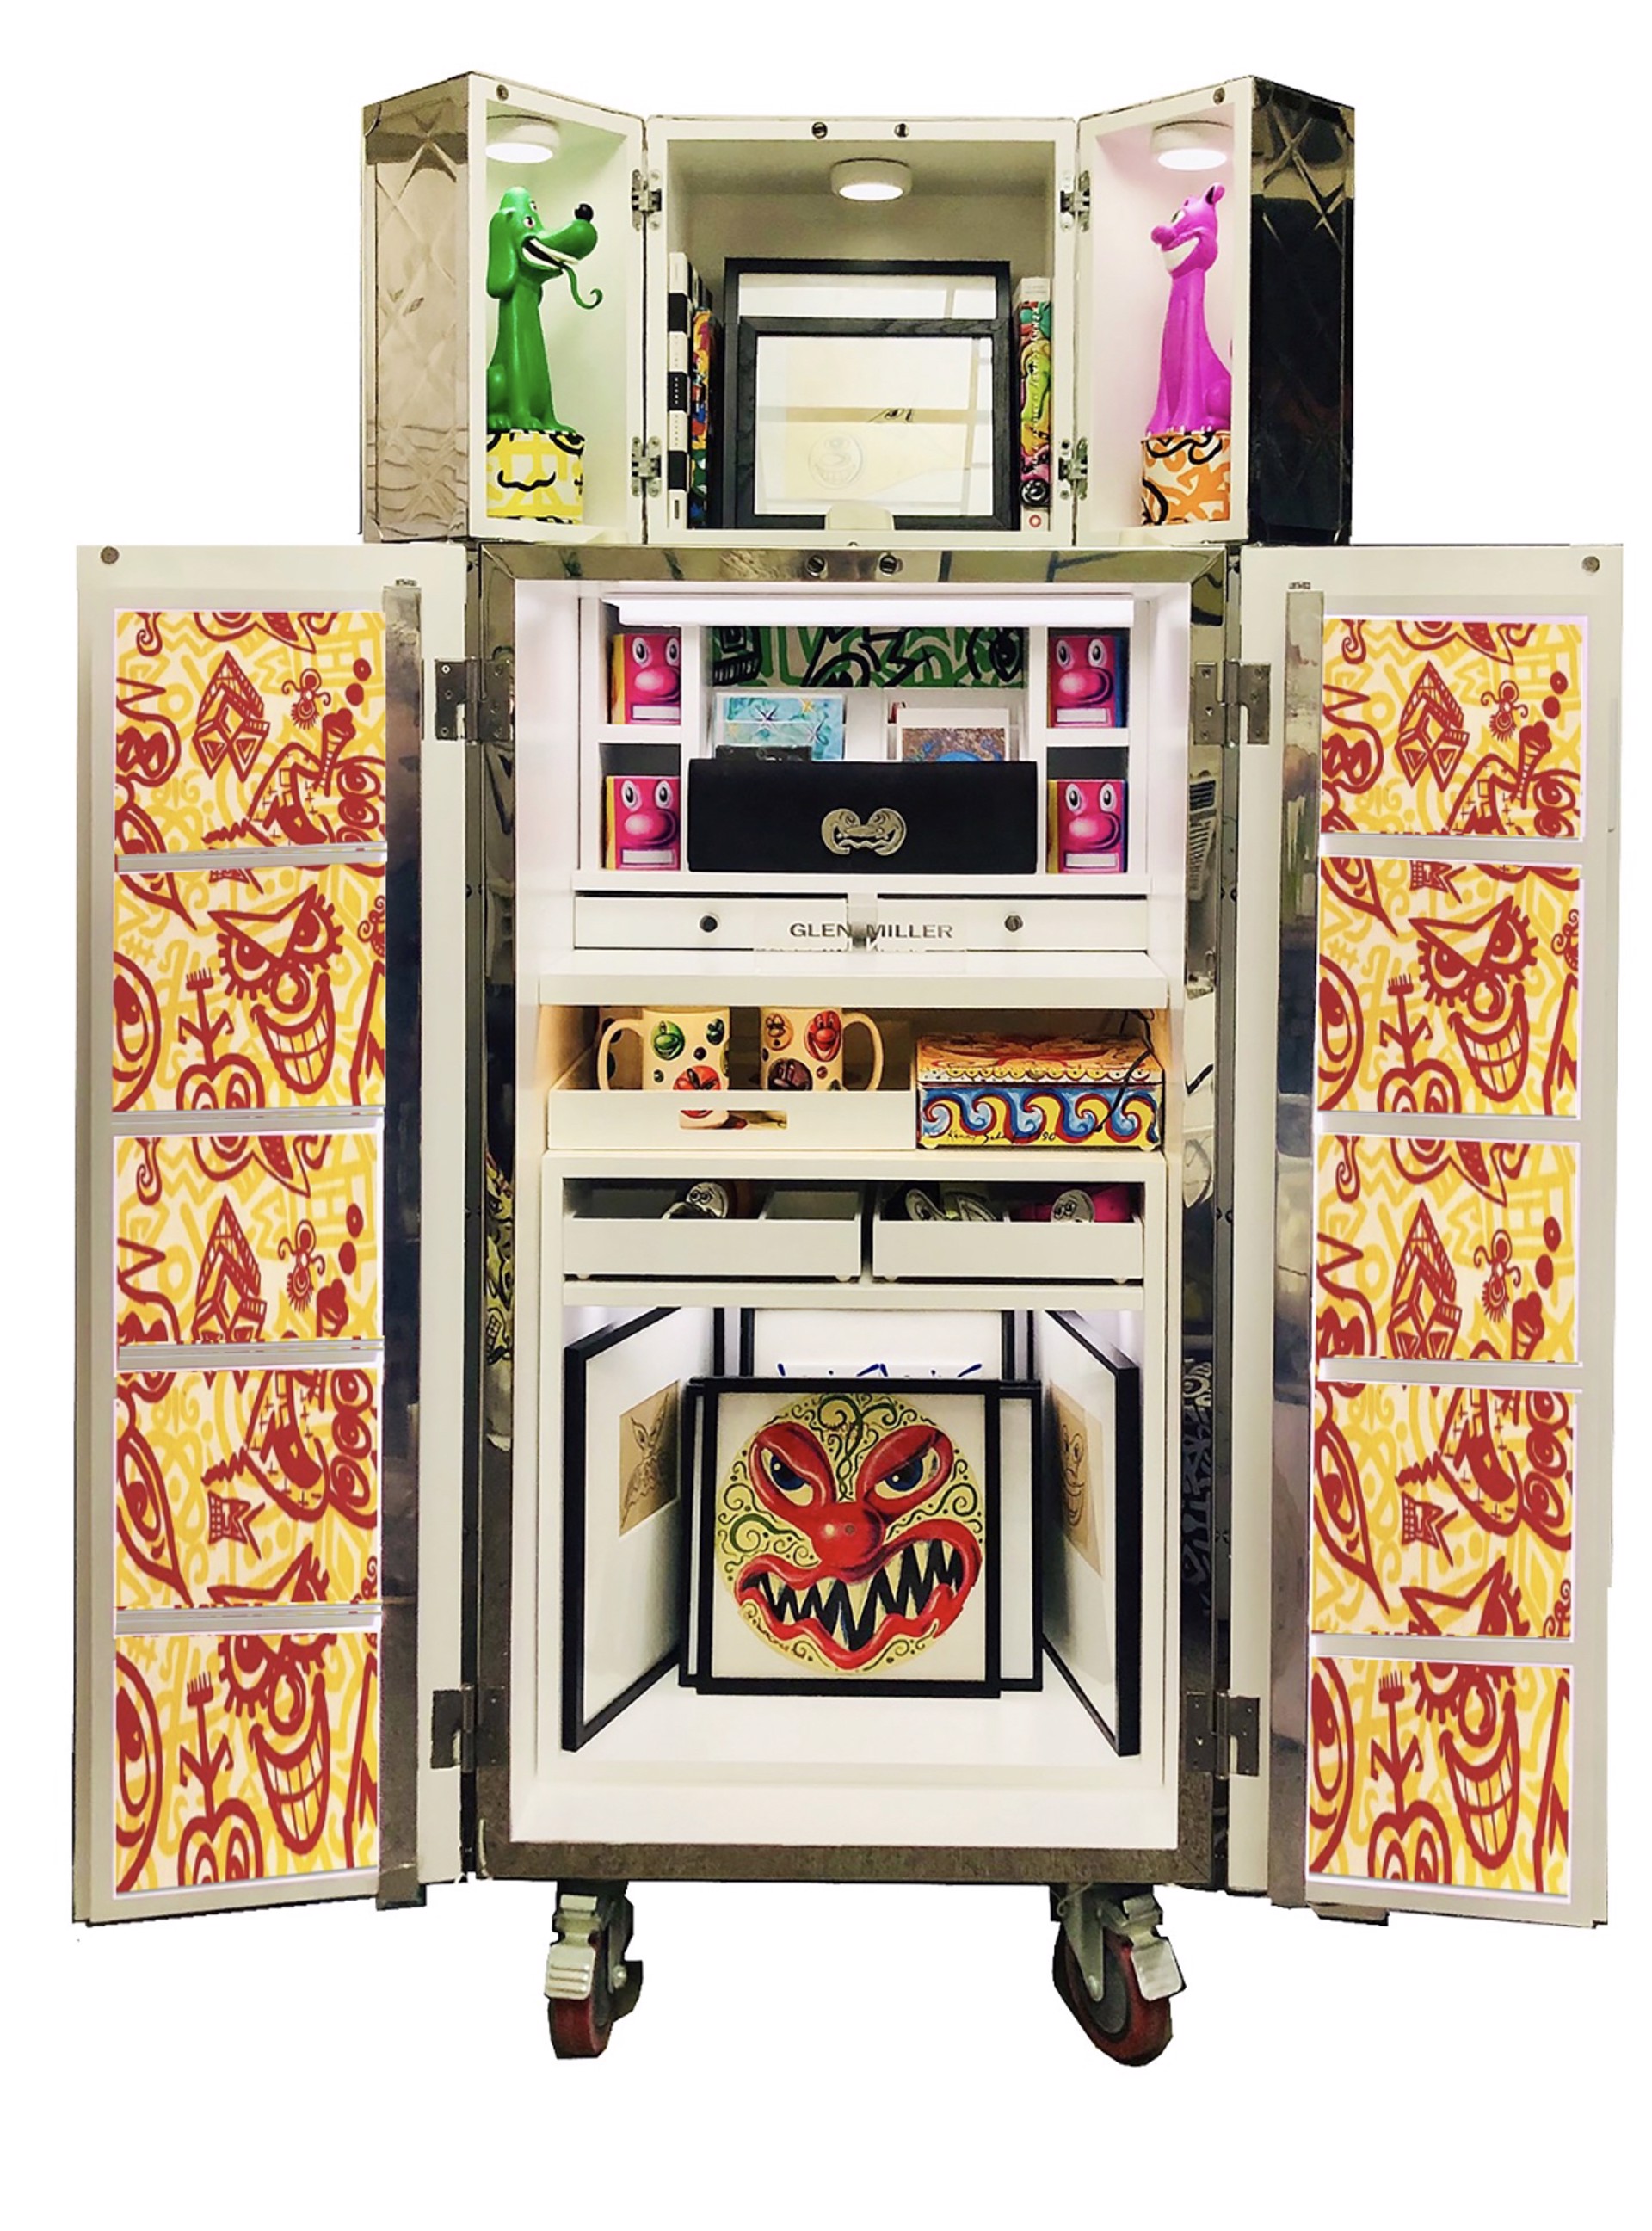 Kosmic Cabinet by Glen Miller, Kenny Scharf